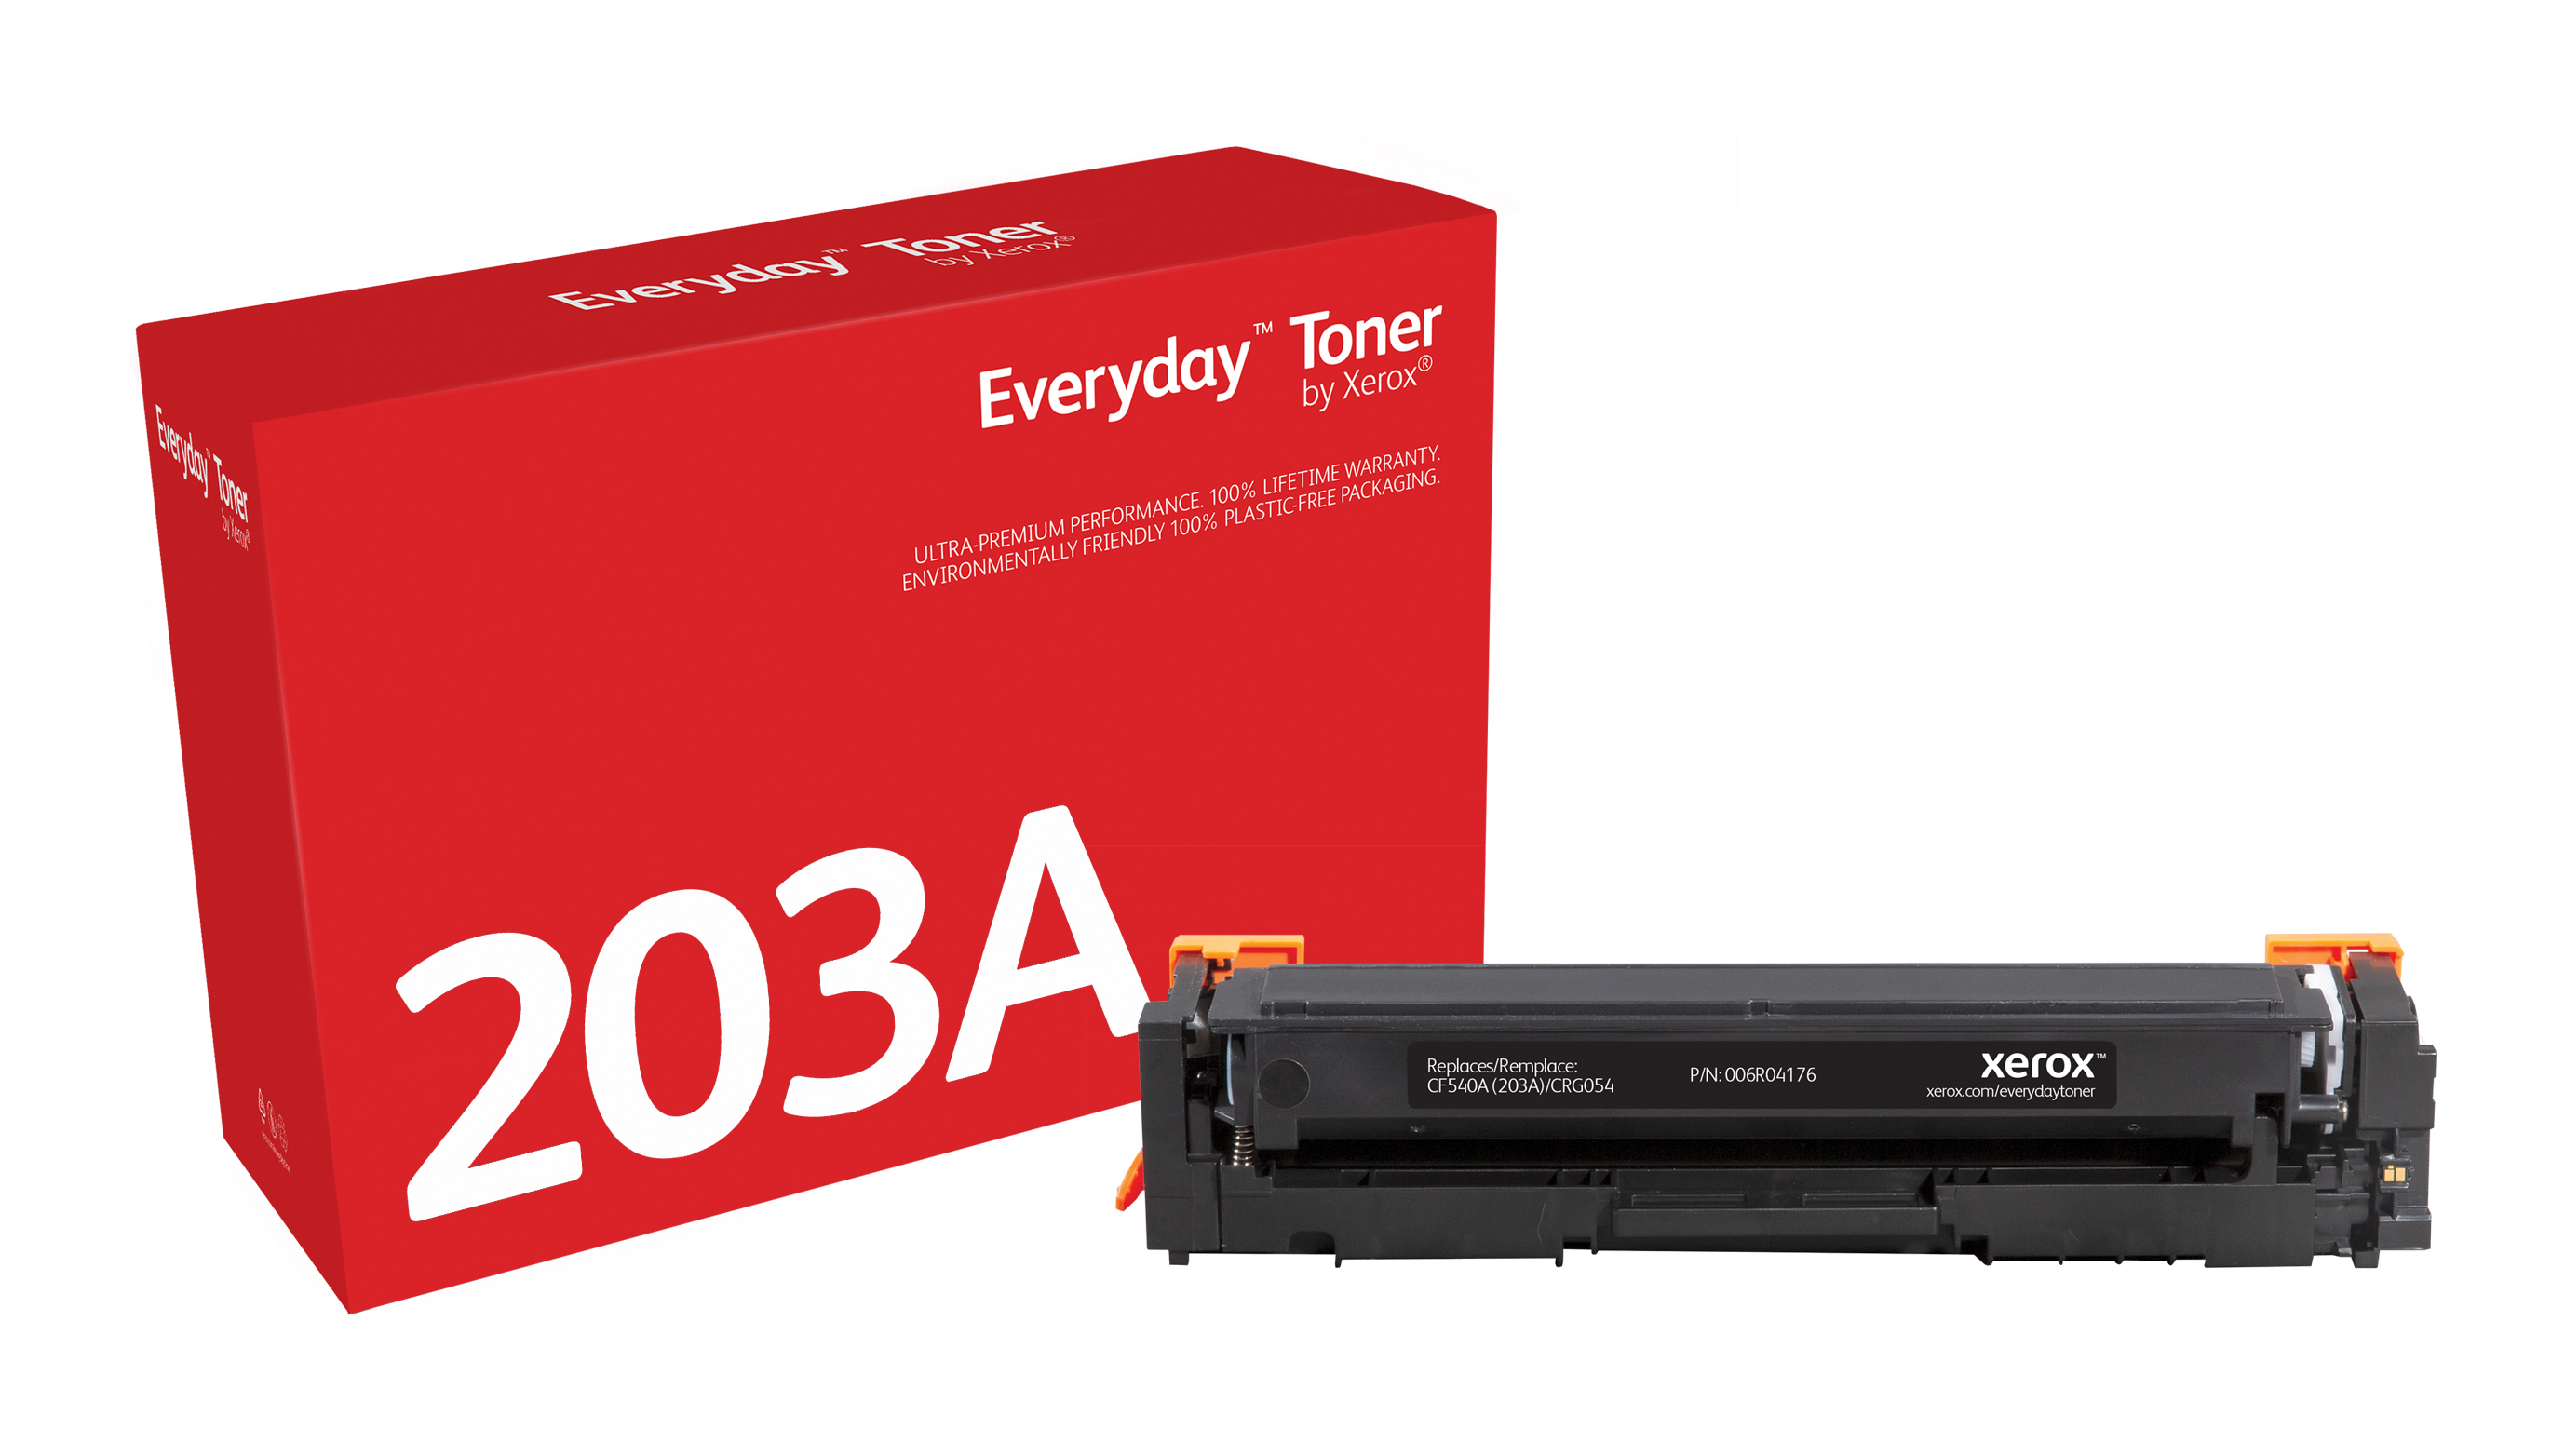 Toner Everyday™ Noir de Xerox compatible avec 202A (CF540A/CRG-054BK),  Capacité standard 006R04176 Genuine Xerox Supplies